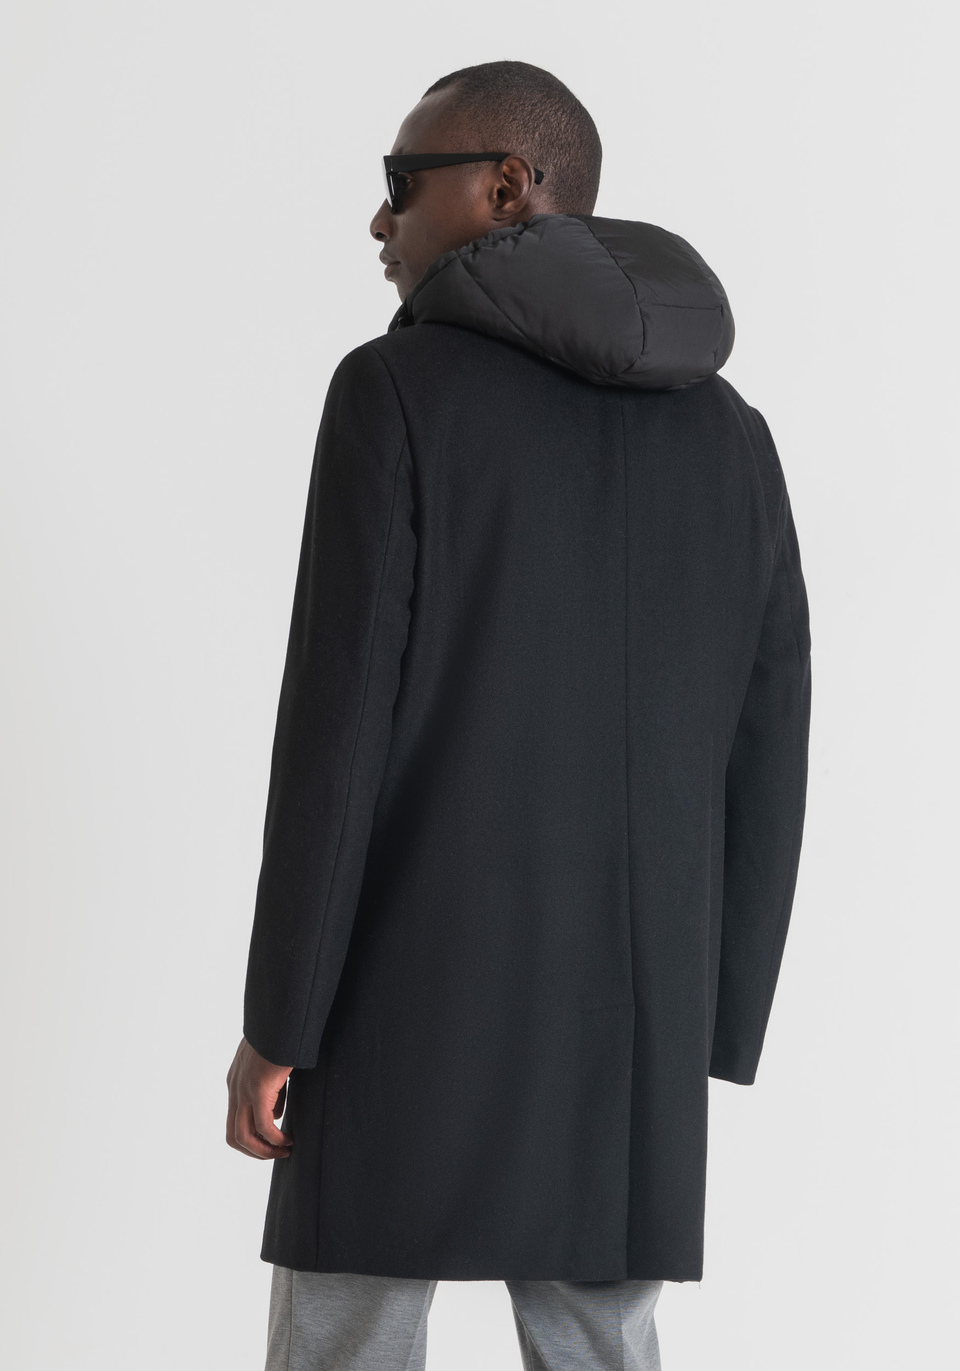 "DANIEL" SLIM FIT COAT IN WOOL-BLEND MELTON WITH DETACHABLE HOOD - Antony Morato Online Shop